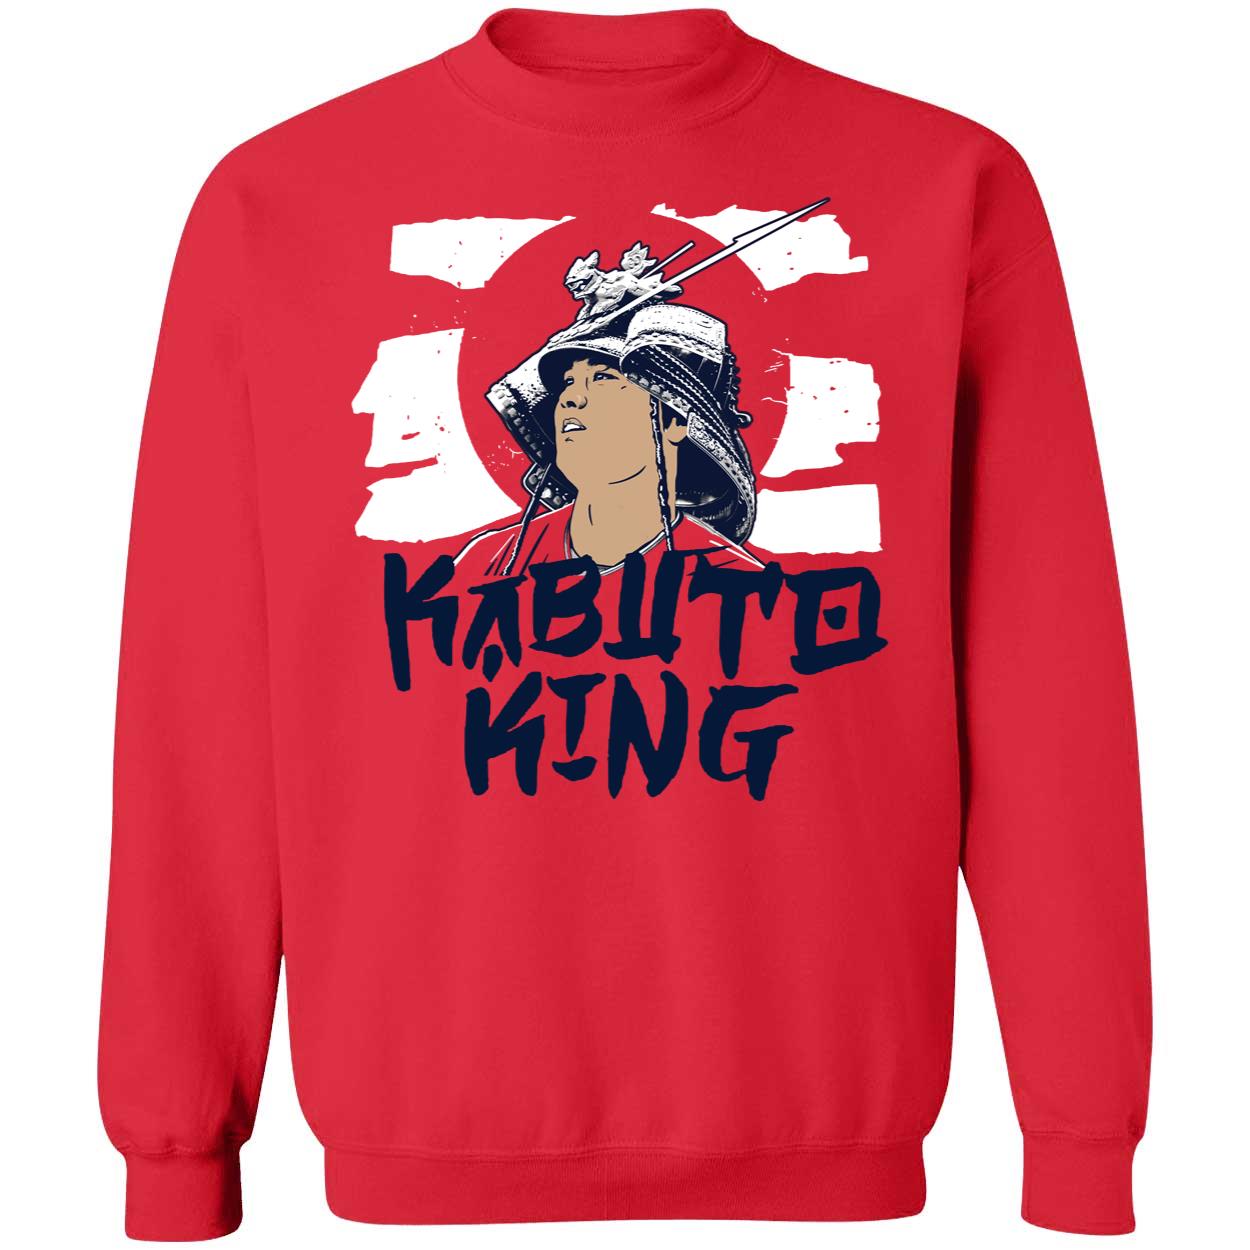 Shohei Ohtani The Kabuto King shirt, hoodie, longsleeve